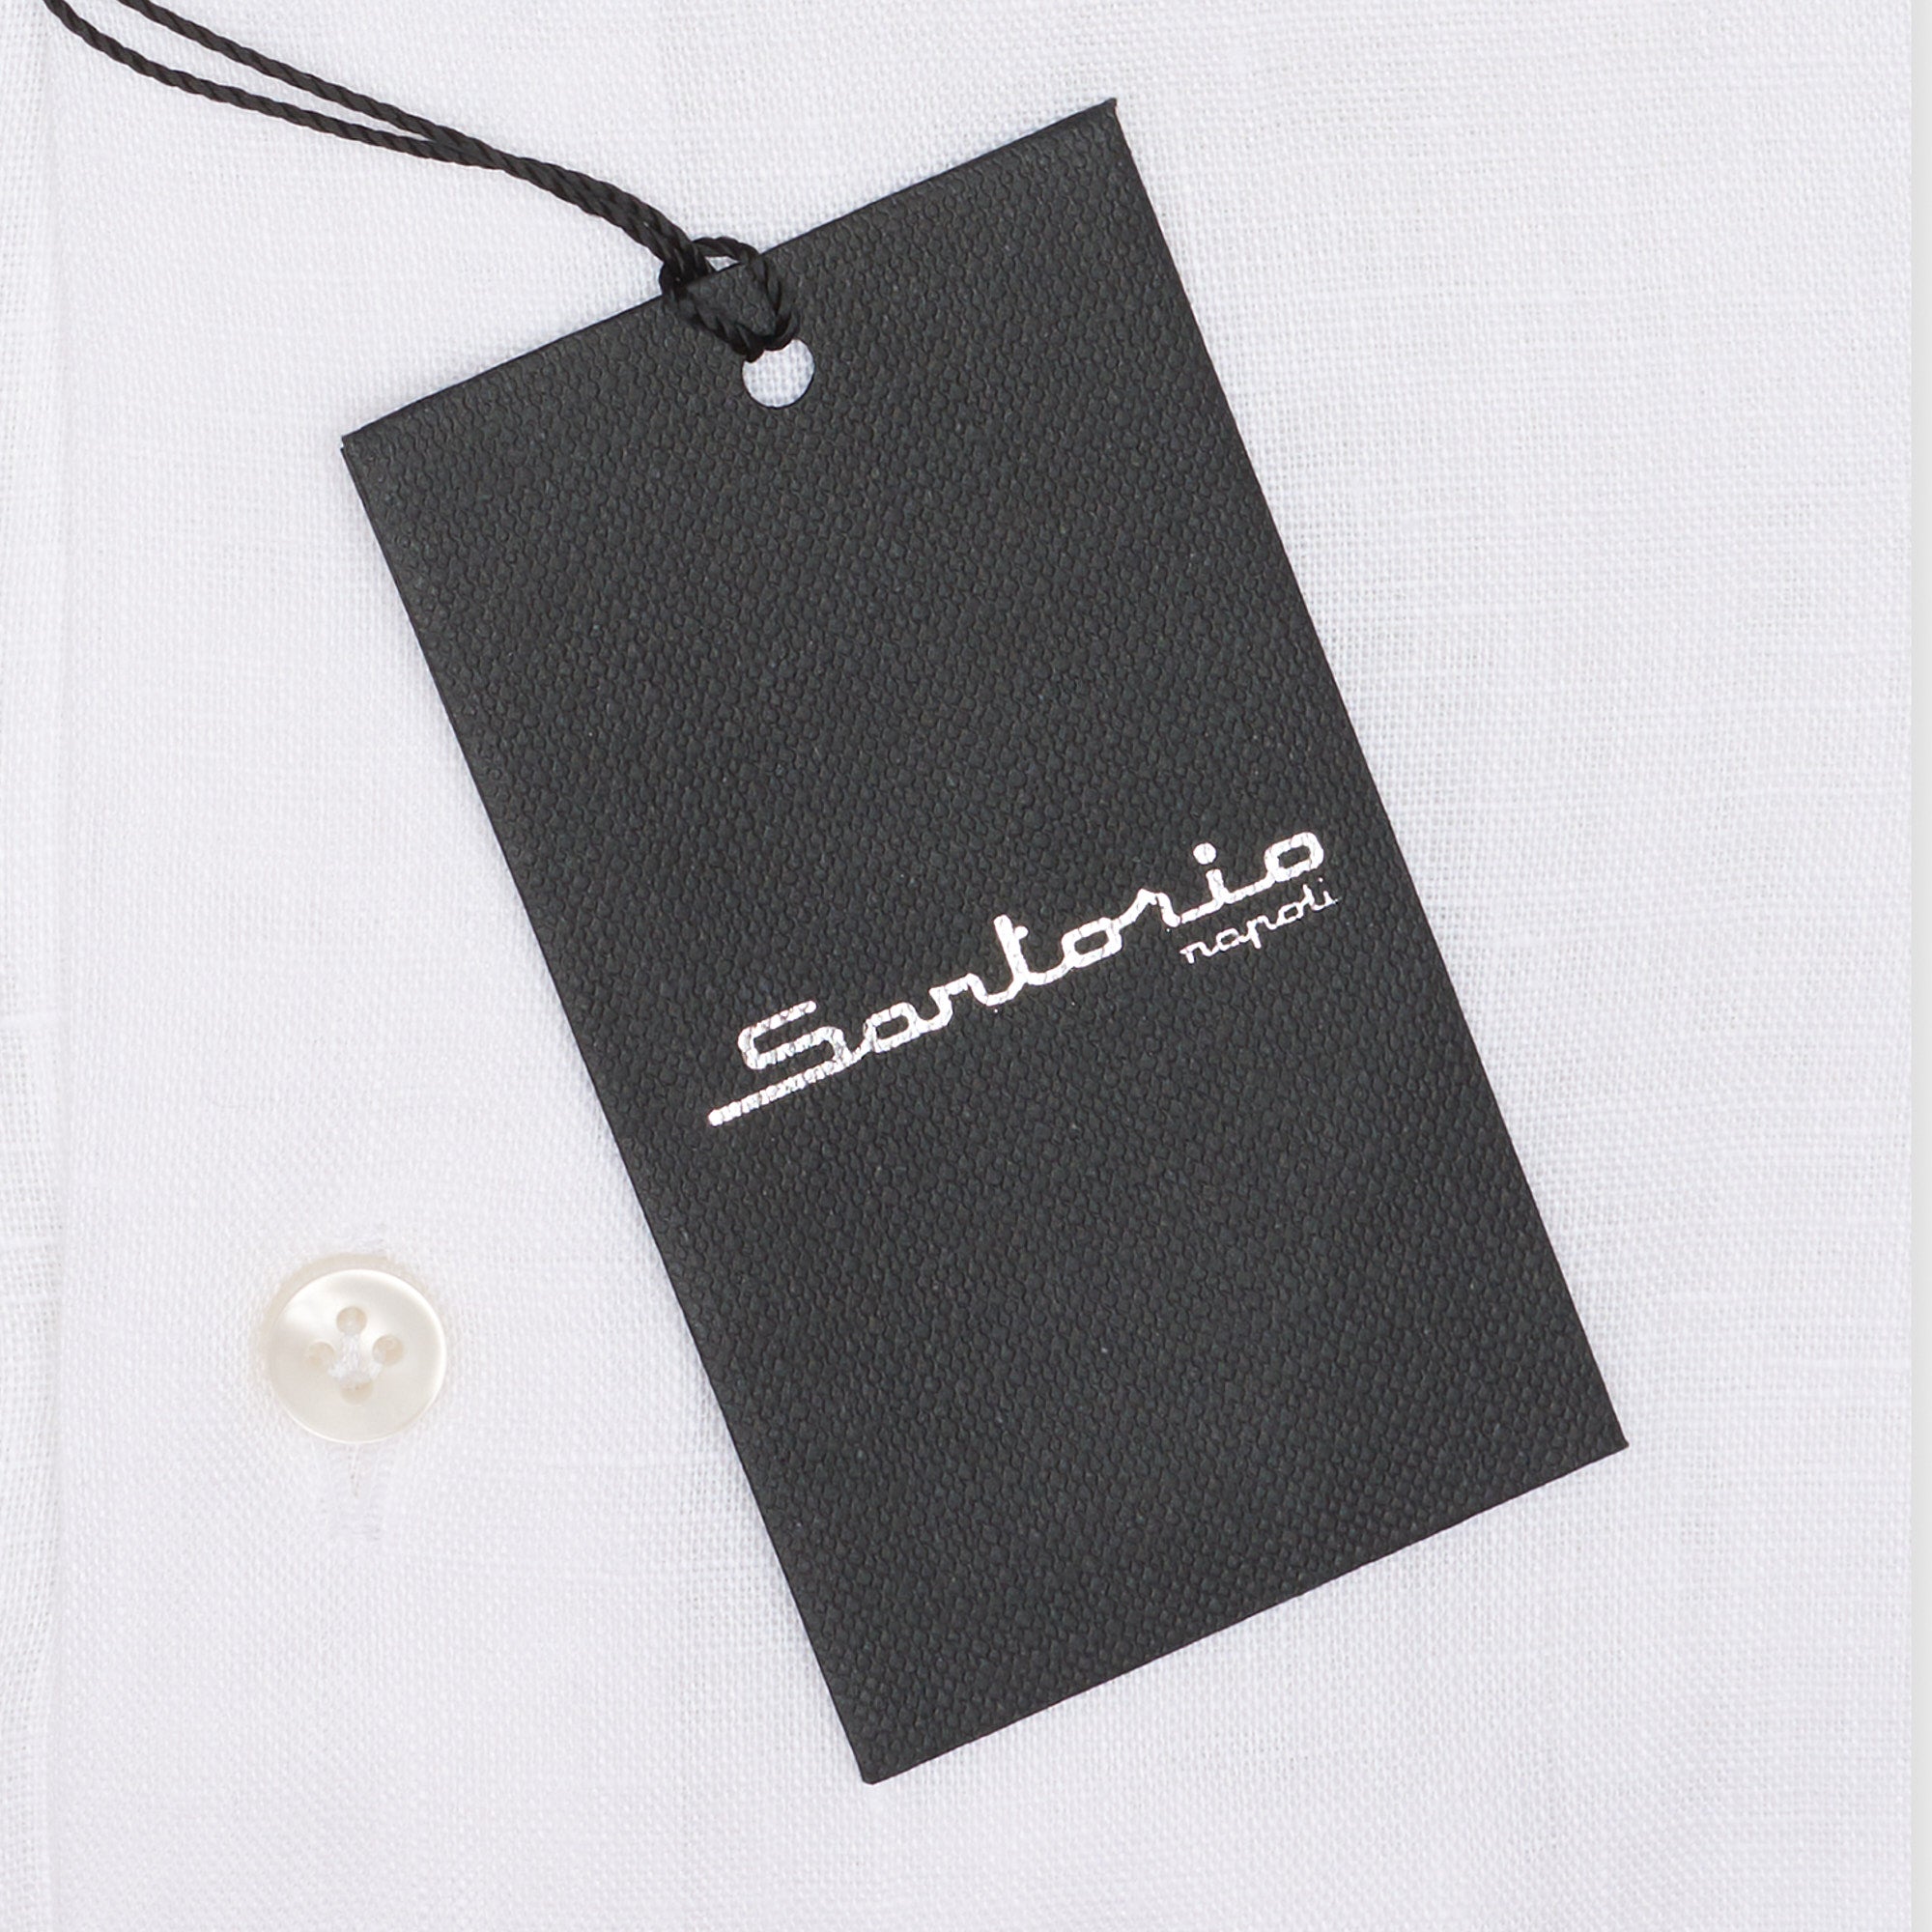 SARTORIO Napoli by KITON White Linen Spread Collar Shirt Slim Fit NEW SARTORIO